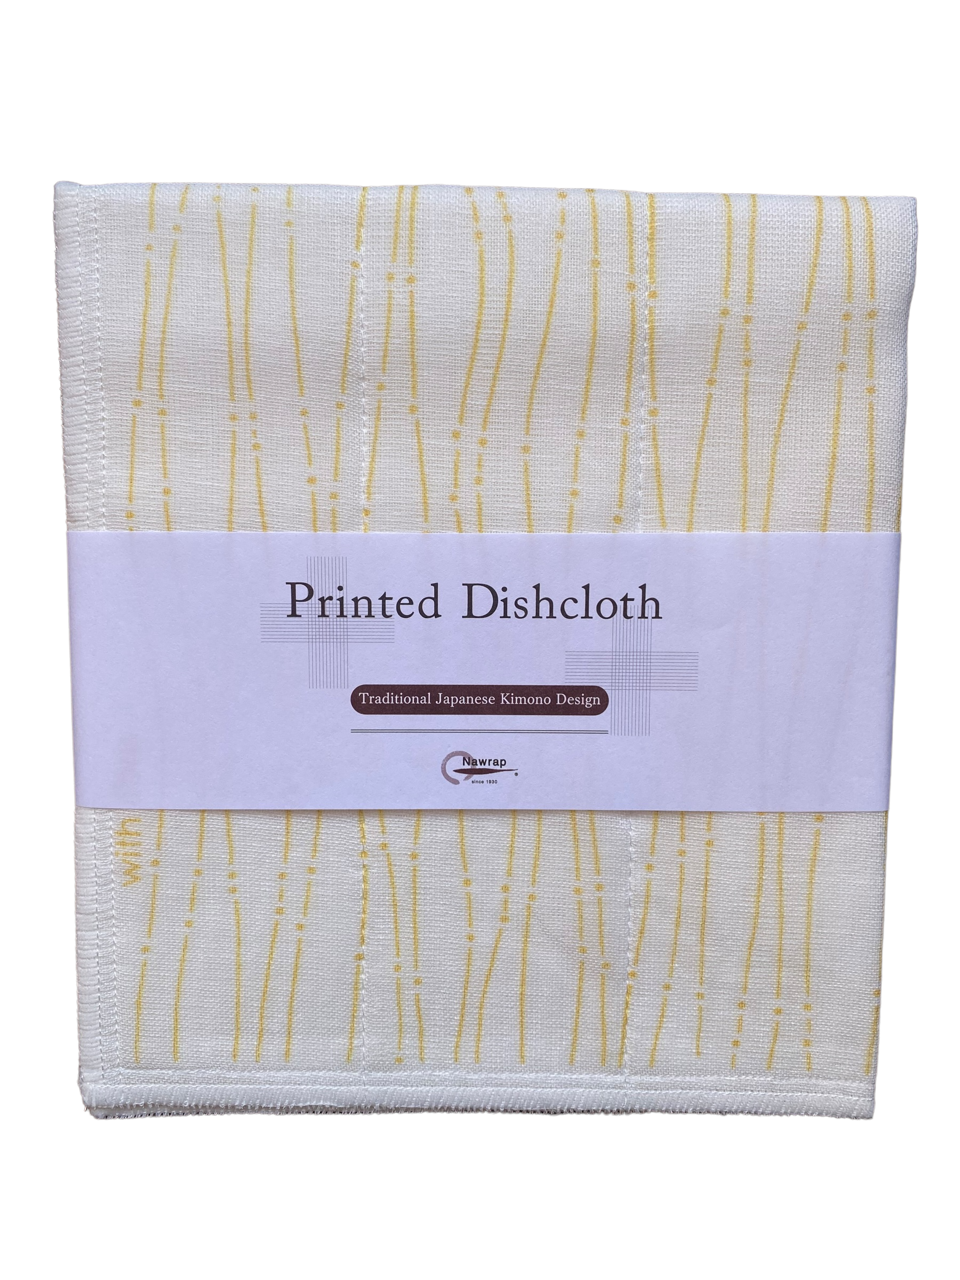 Printed Dishcloth - Kimono Design